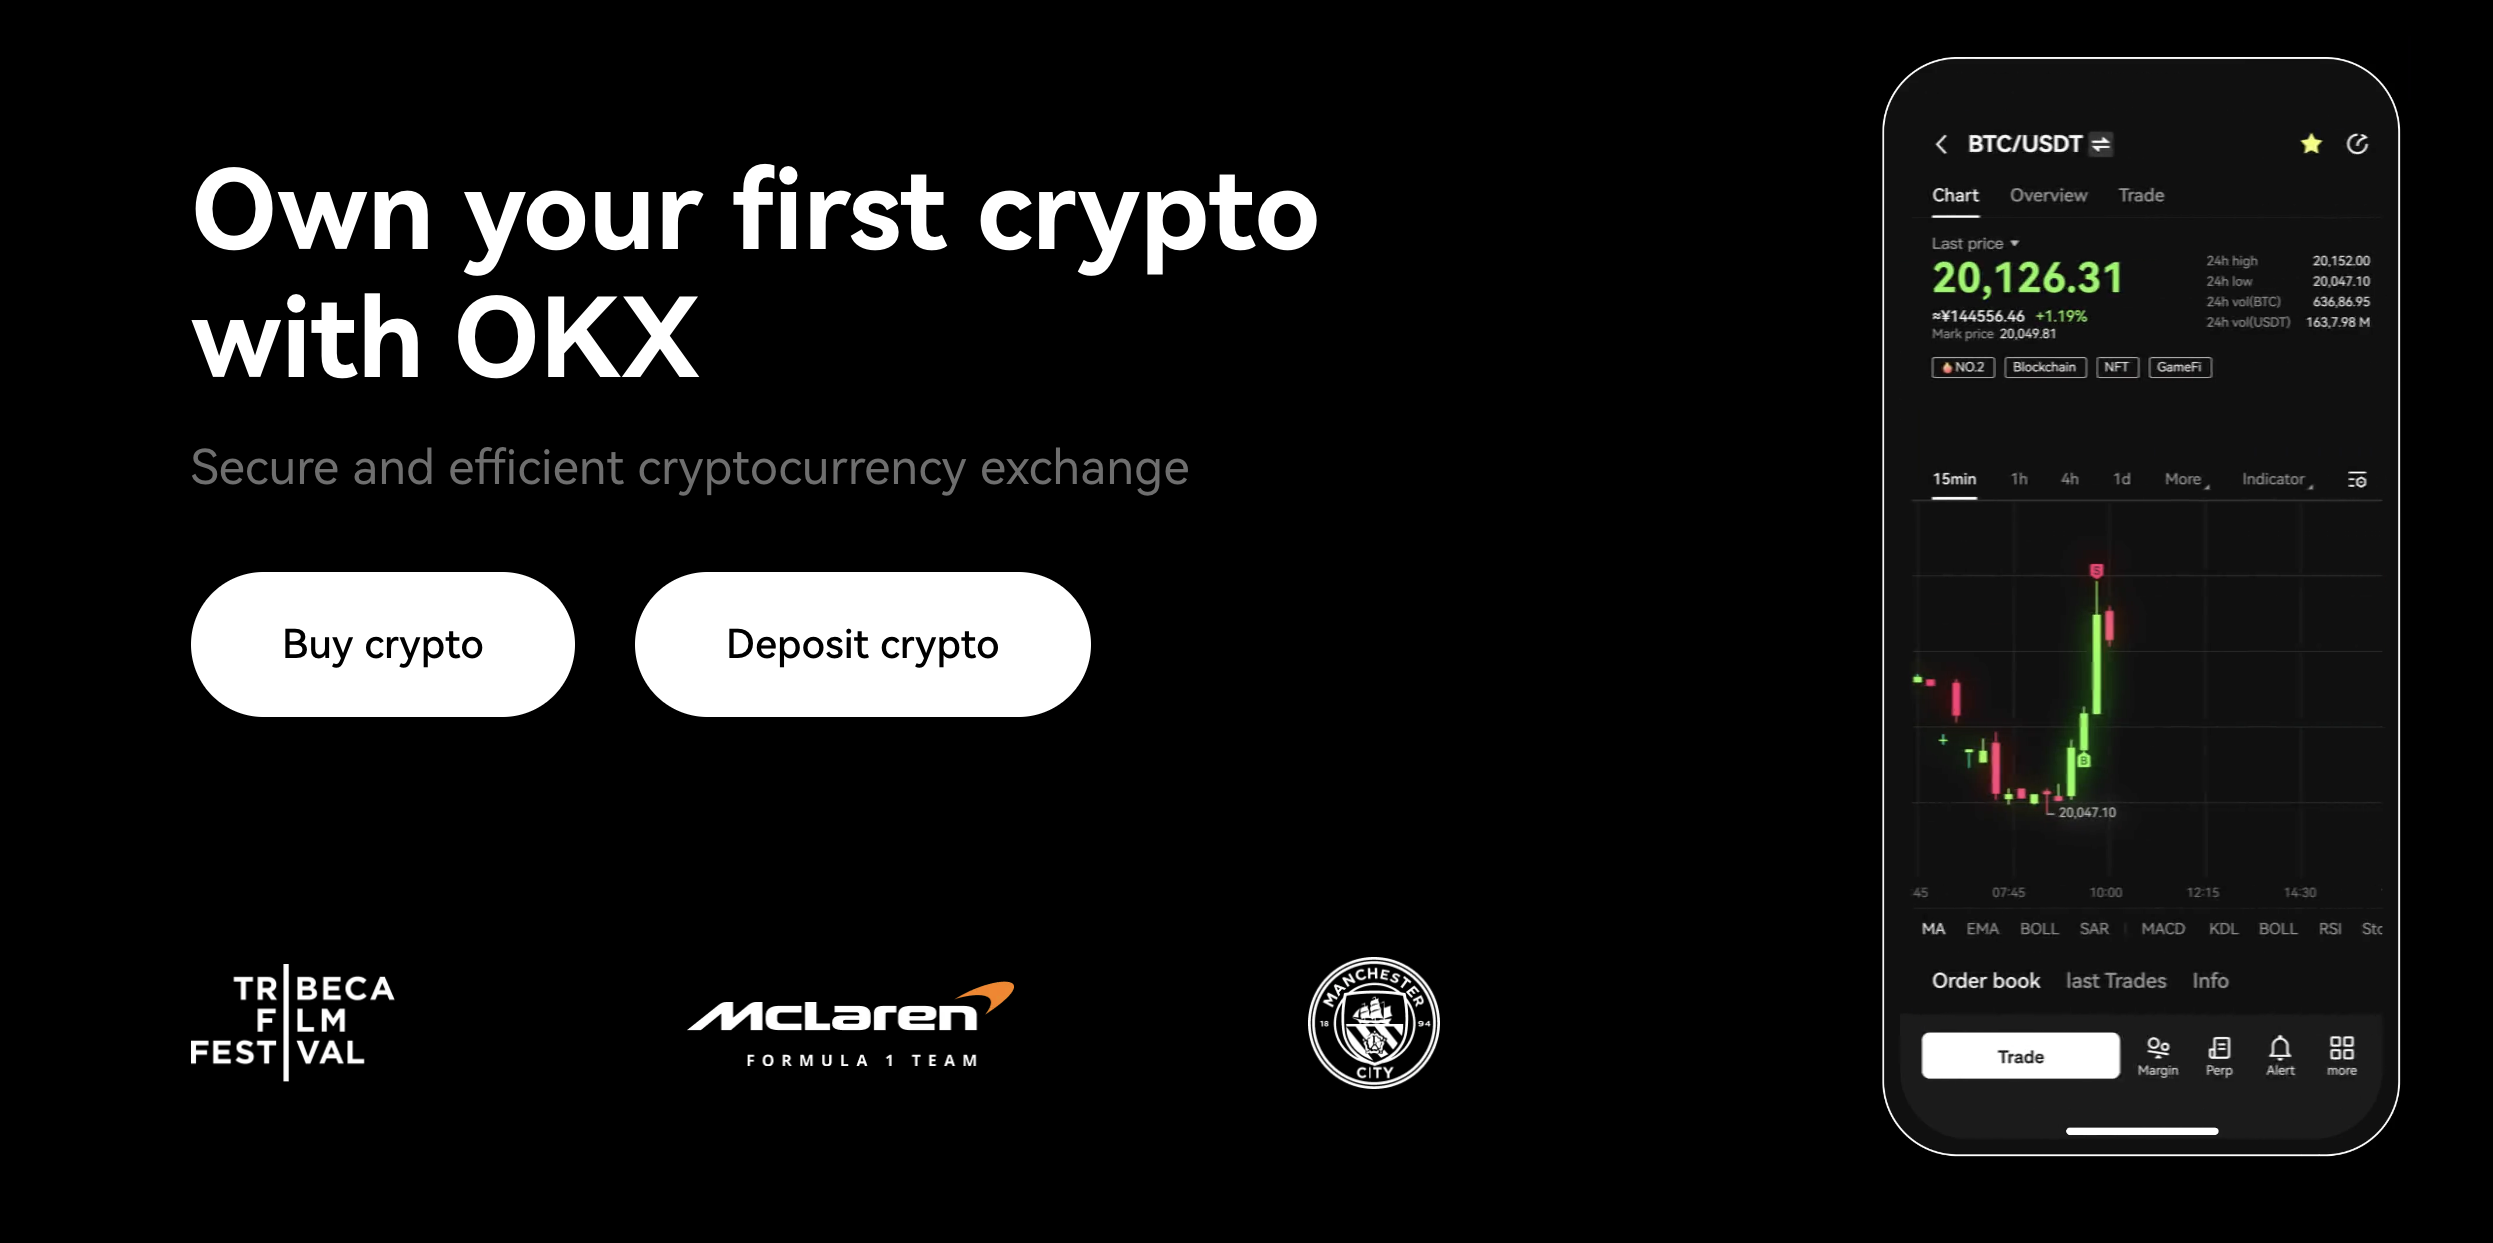 OKX Crypto credit card